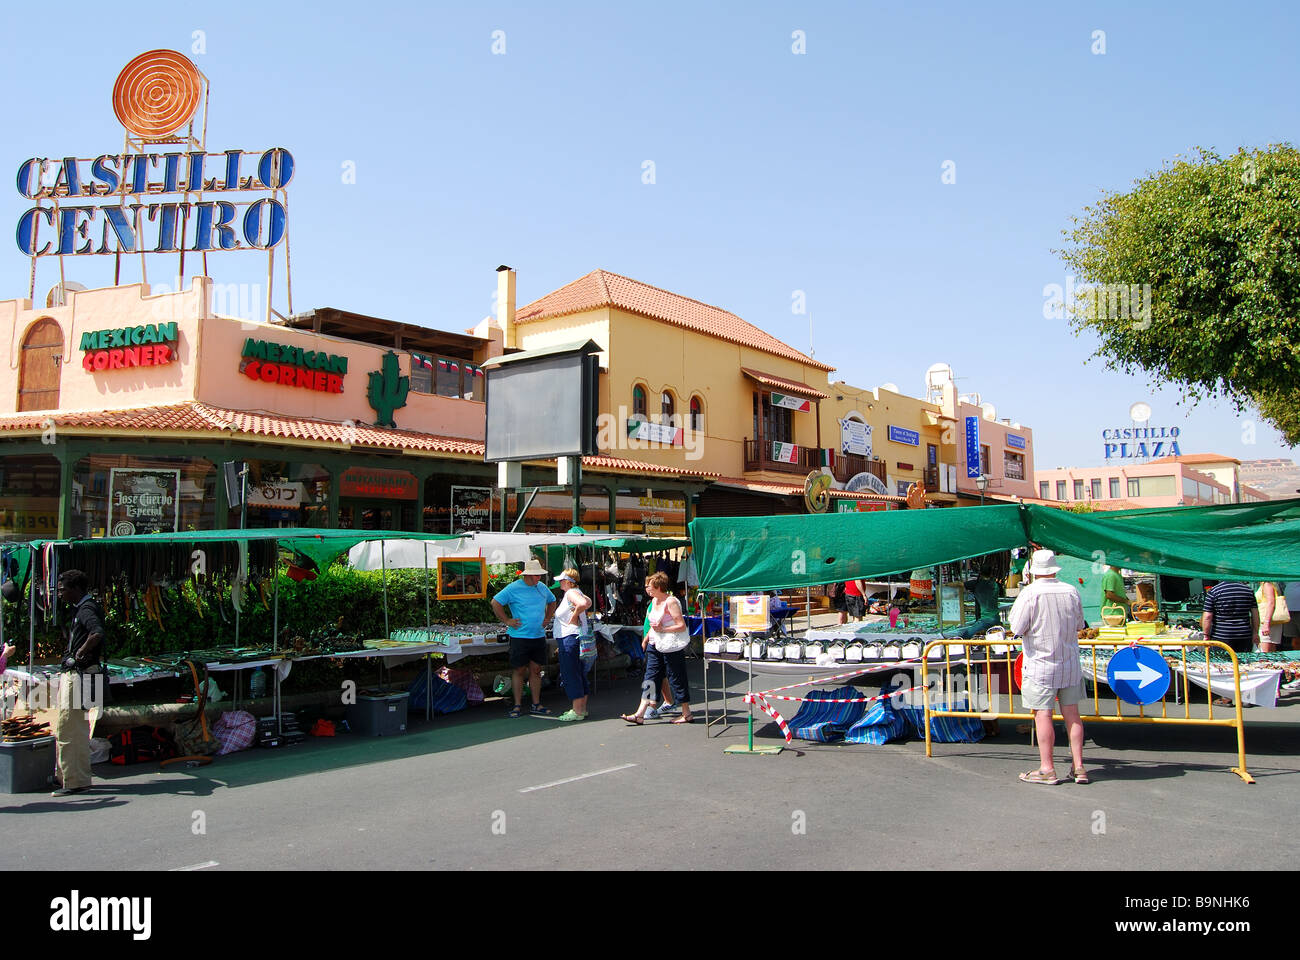 Samstag Markt, Caleta de Fuste, Fuerteventura, Kanarische Inseln, Spanien Stockfoto